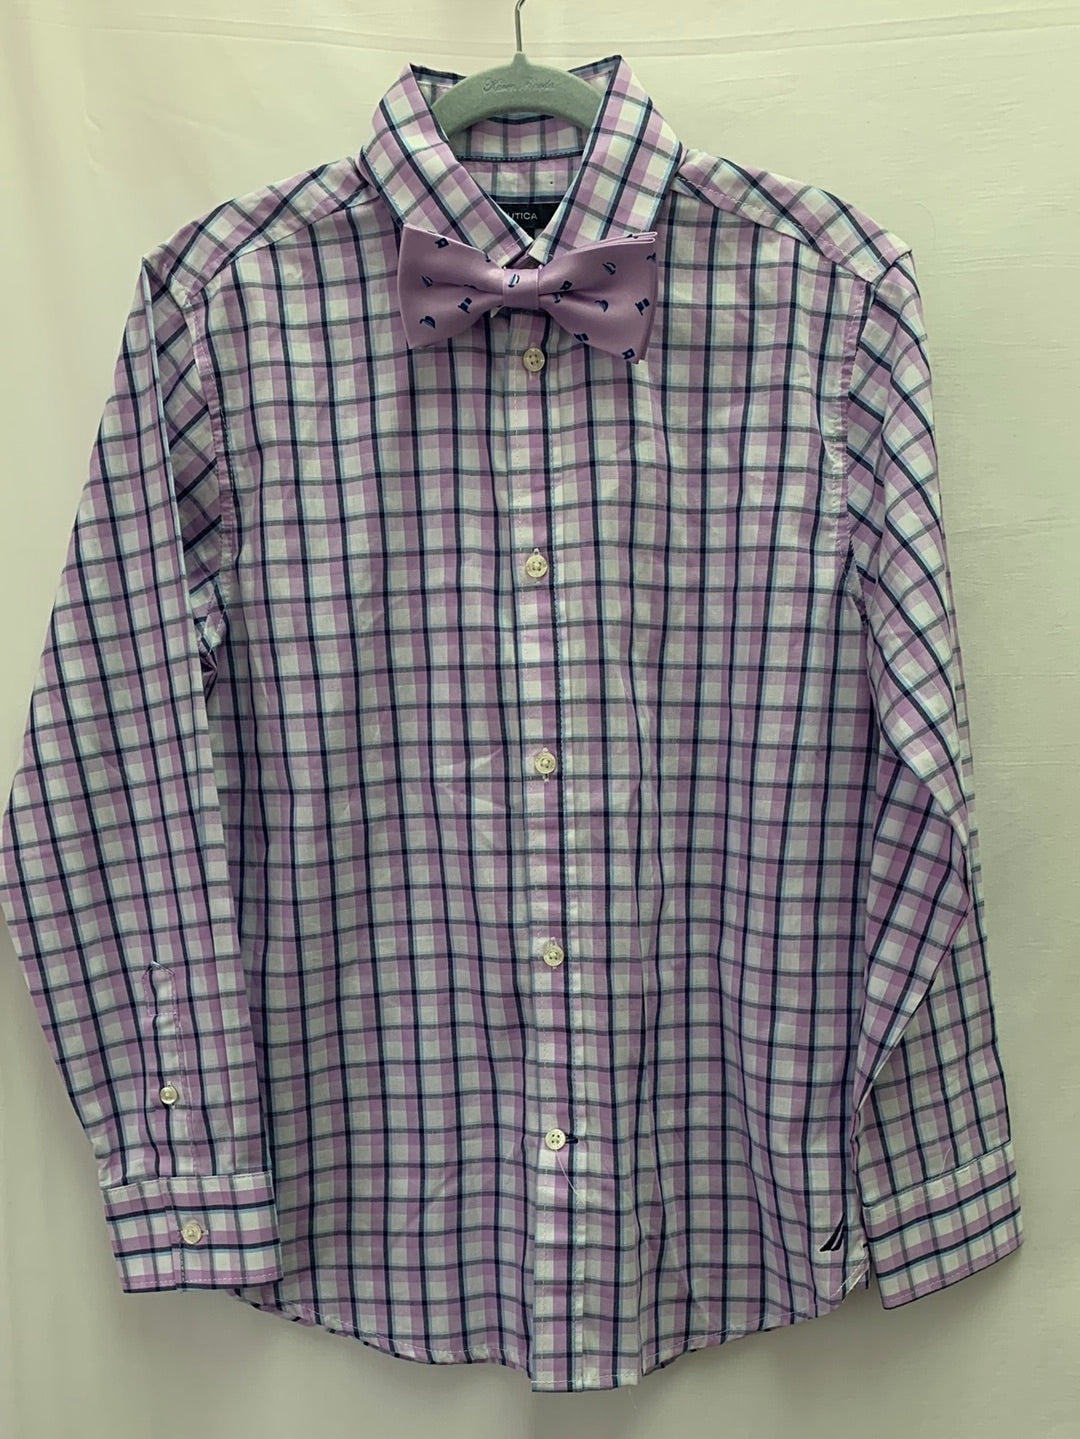 NWT - NAUTICA purple plaid Dress Shirt with Bowtie - Youth 10